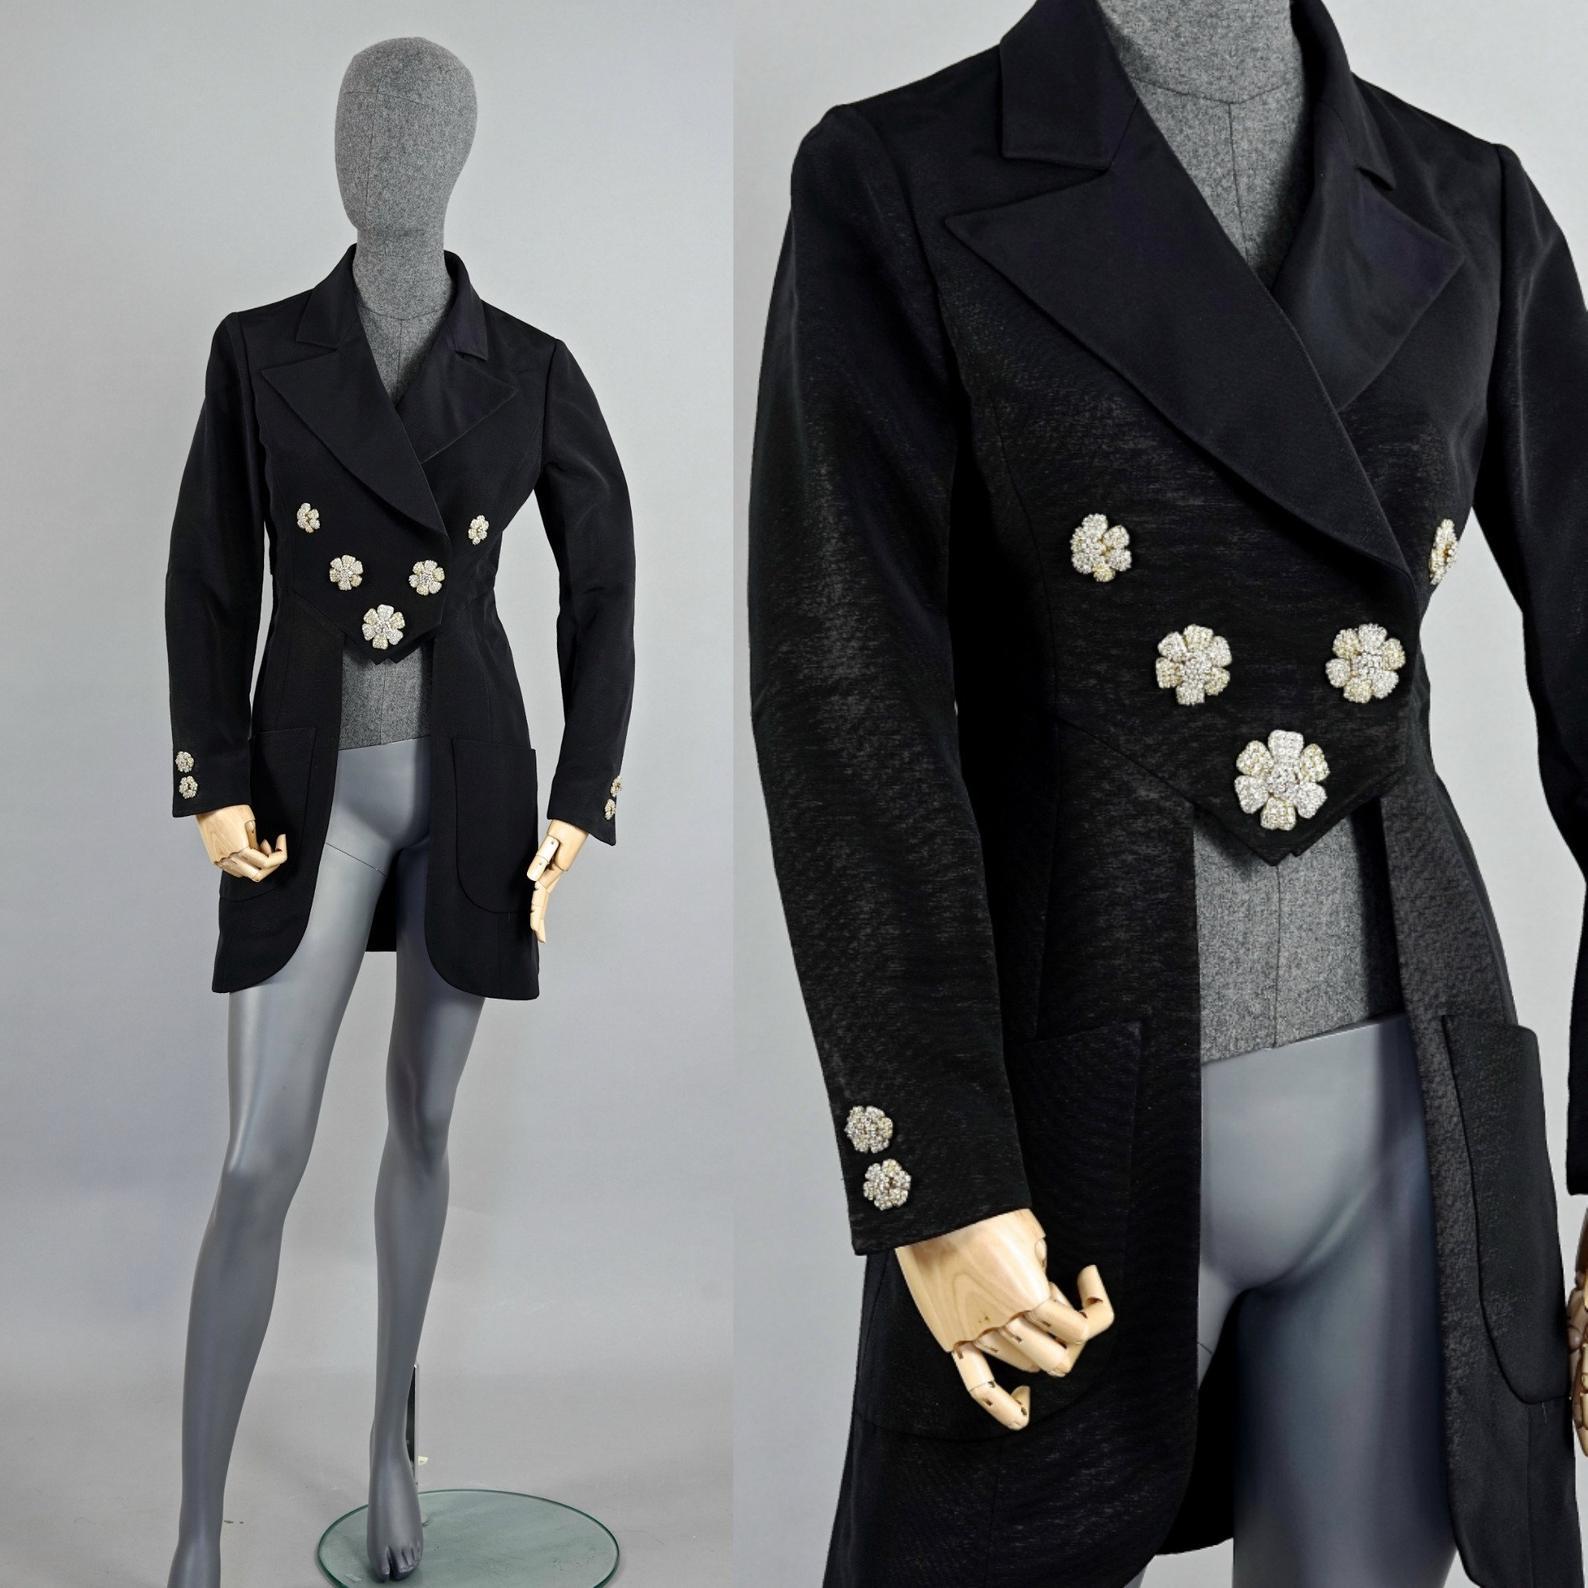 Vintage RARE KARL LAGERFELD Flower Jewelled Dress Coat Tailcoat Jacket

Measurements taken laid flat, please double bust and waist:
Shoulder: 15.74 inches (40 cm)
Sleeves: 23.22 inches (59 cm)
Bust: 17 inches (43 cm)
Waist: 14.17 inches (36 cm)
Back